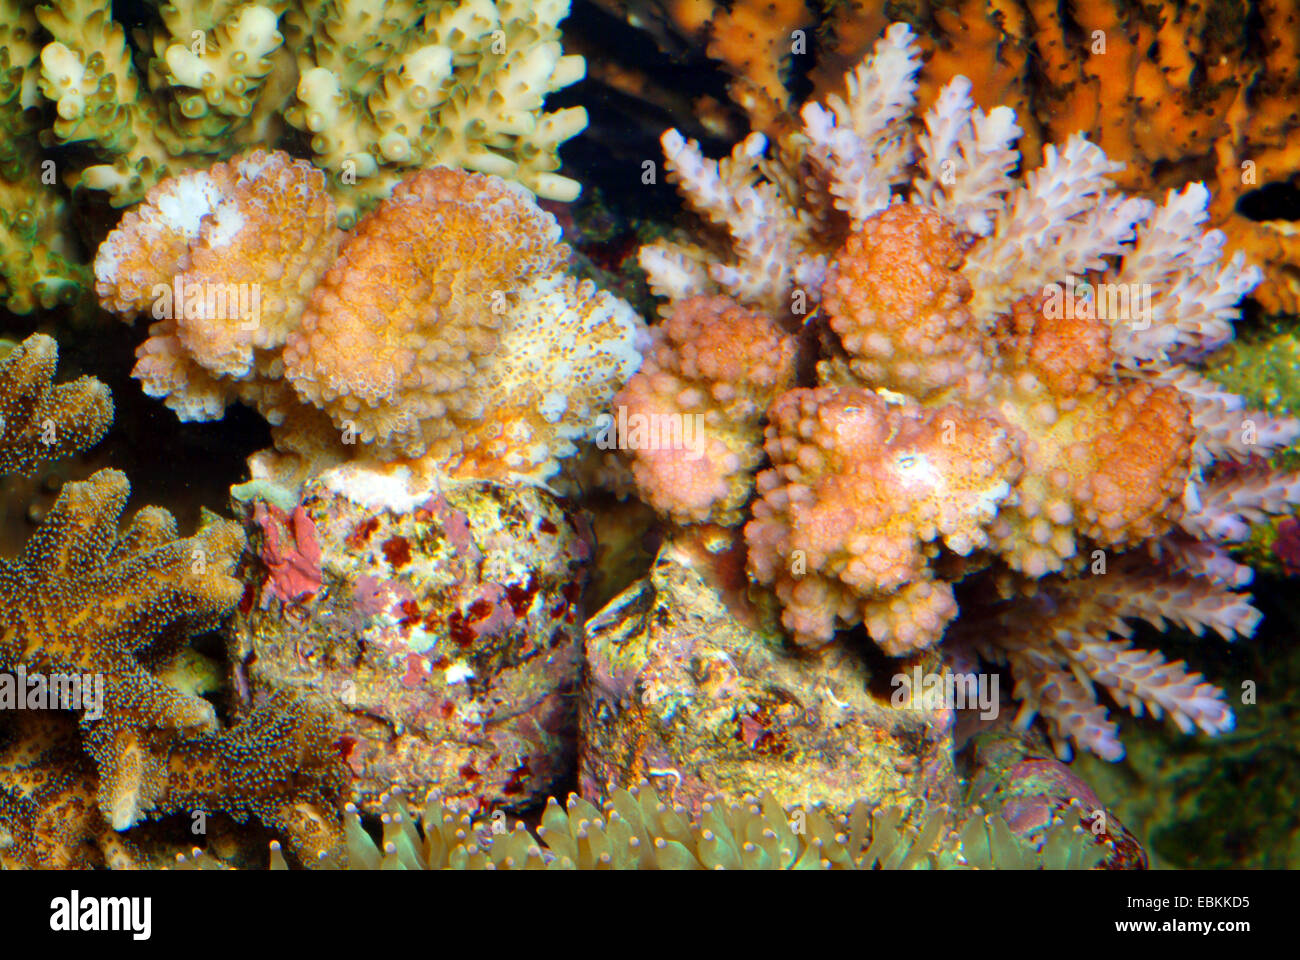 Stony coral (Pocillopora elegans), side view Stock Photo